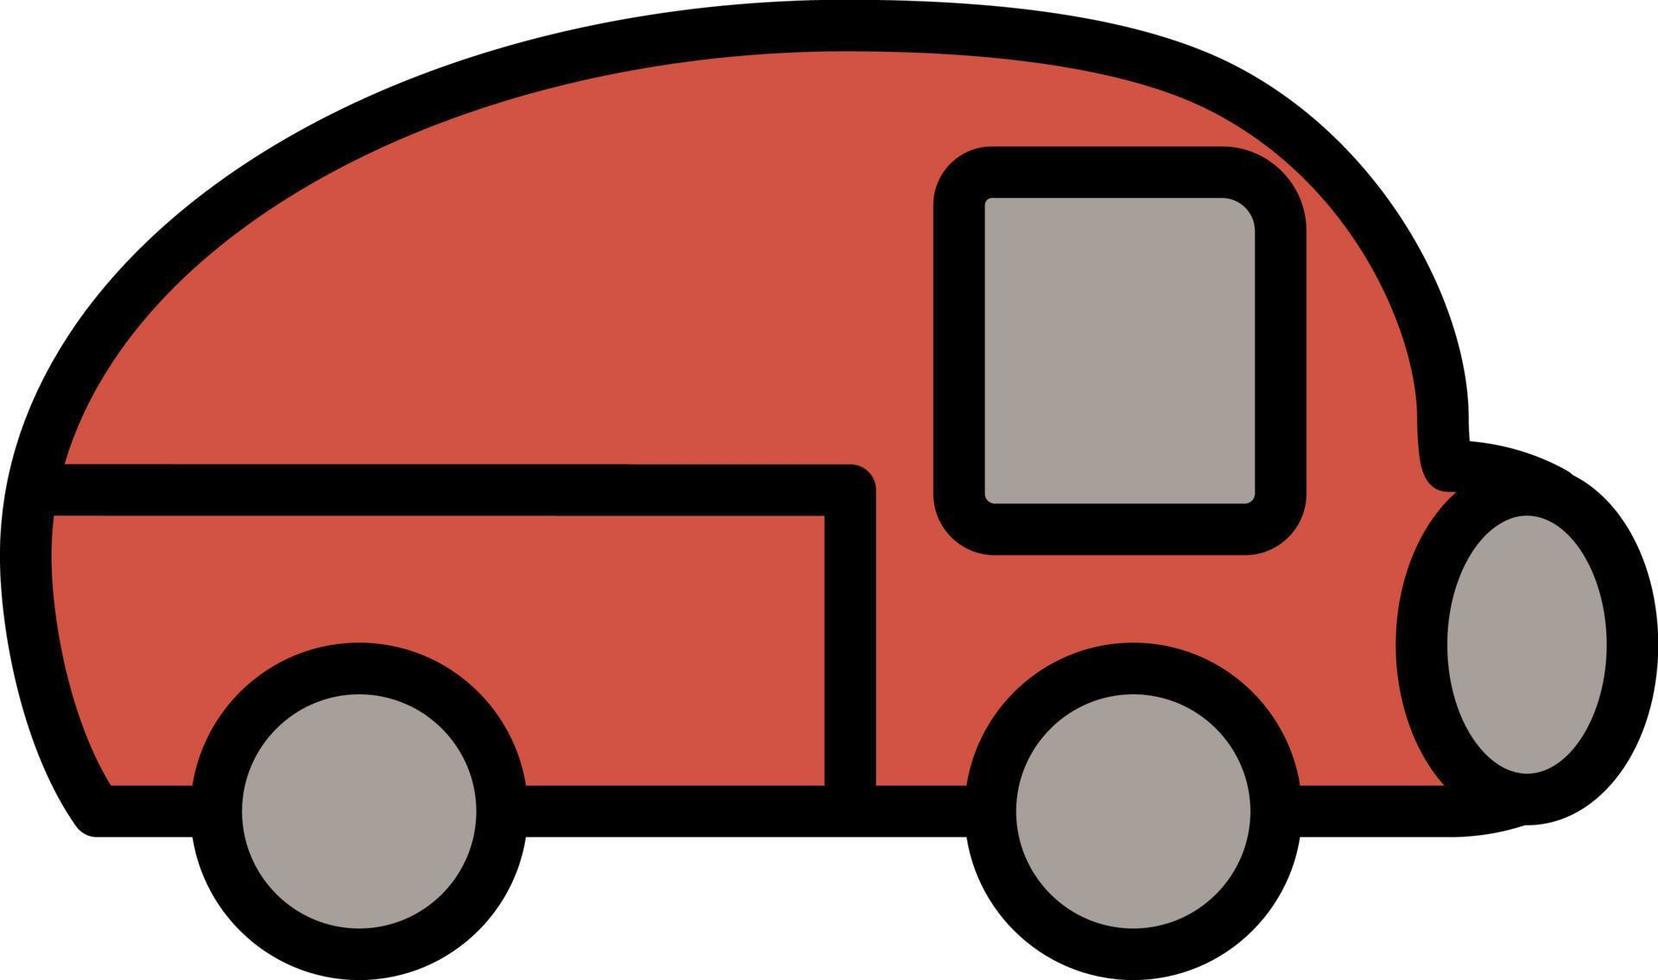 röd små buss, illustration, vektor, på en vit bakgrund. vektor